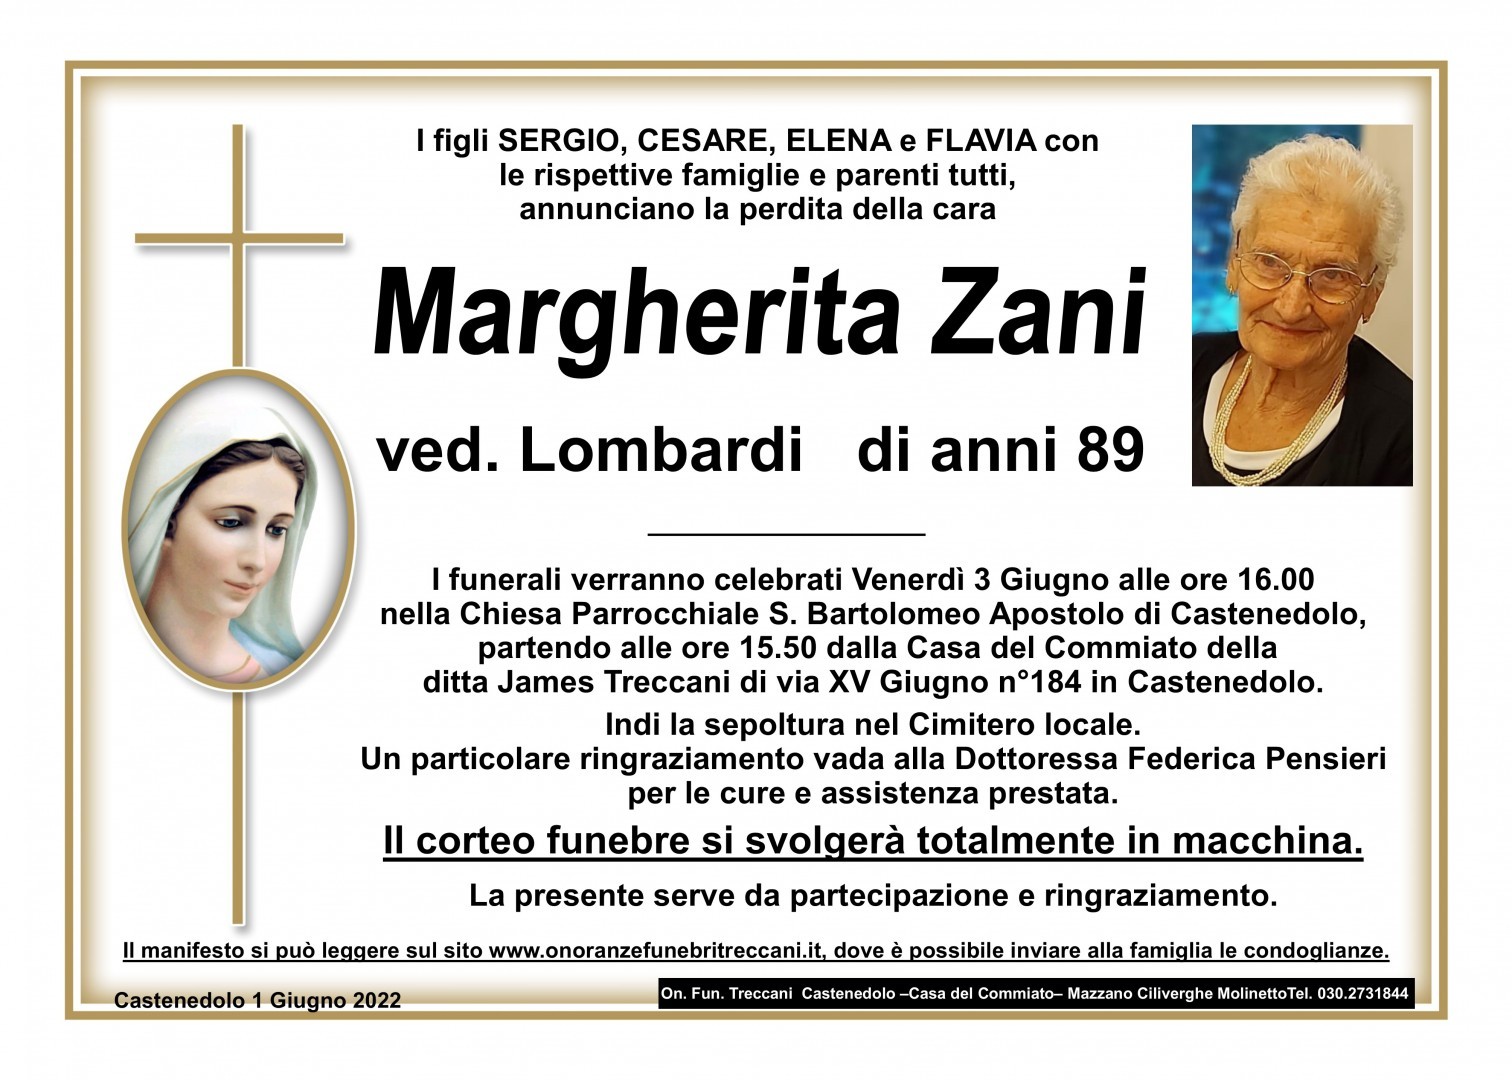 Margherita Zani